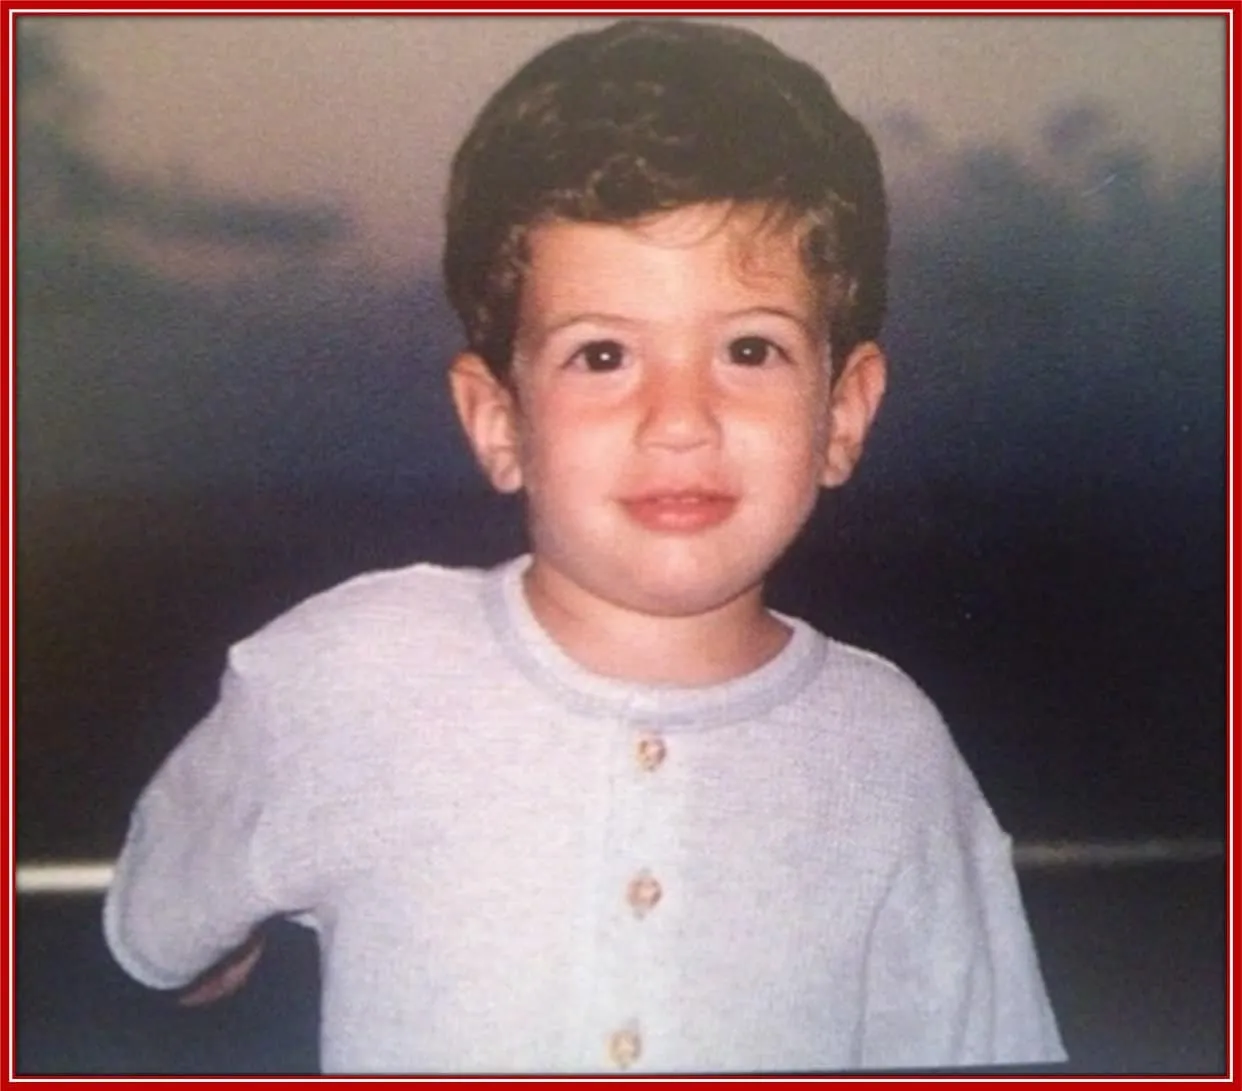 An early childhood photo of Nicholas Latifi.